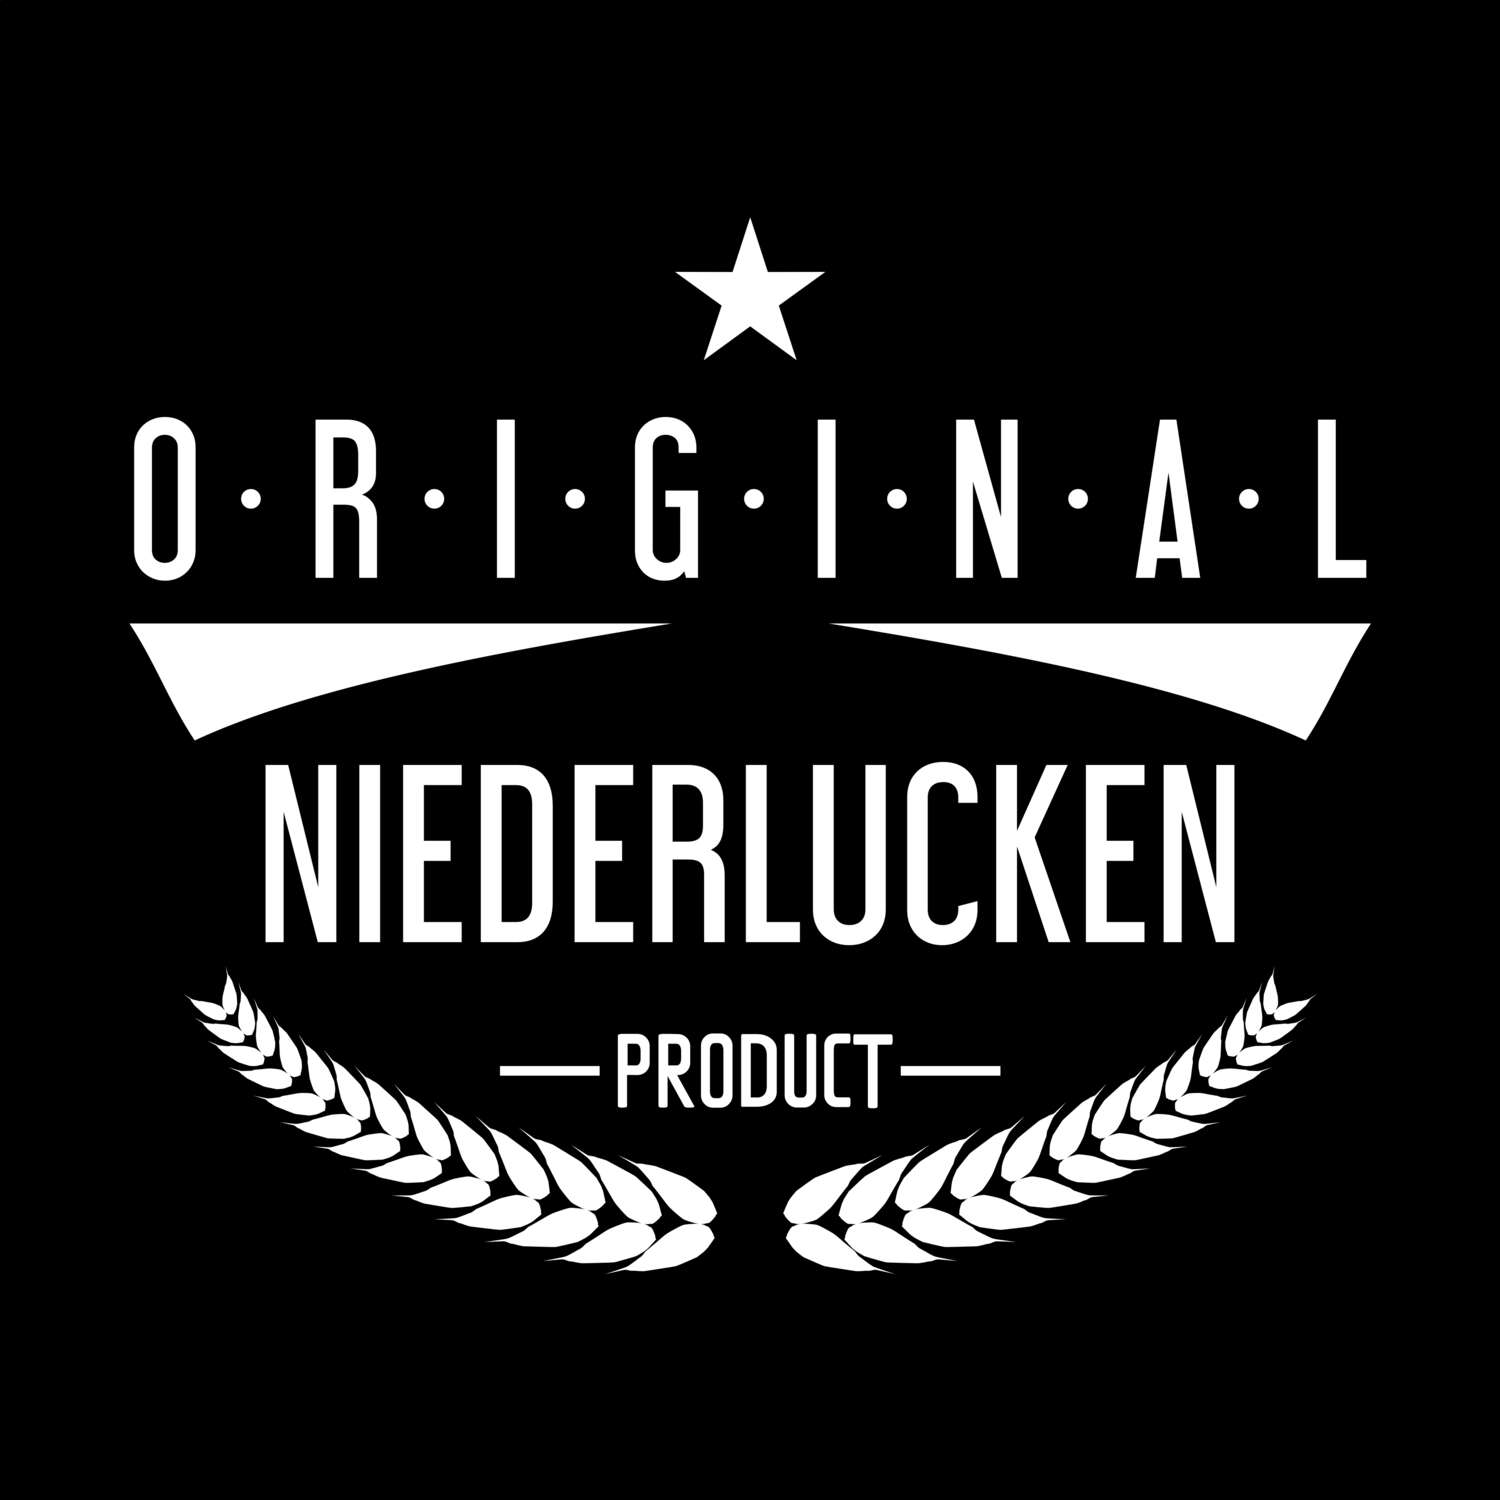 Niederlucken T-Shirt »Original Product«